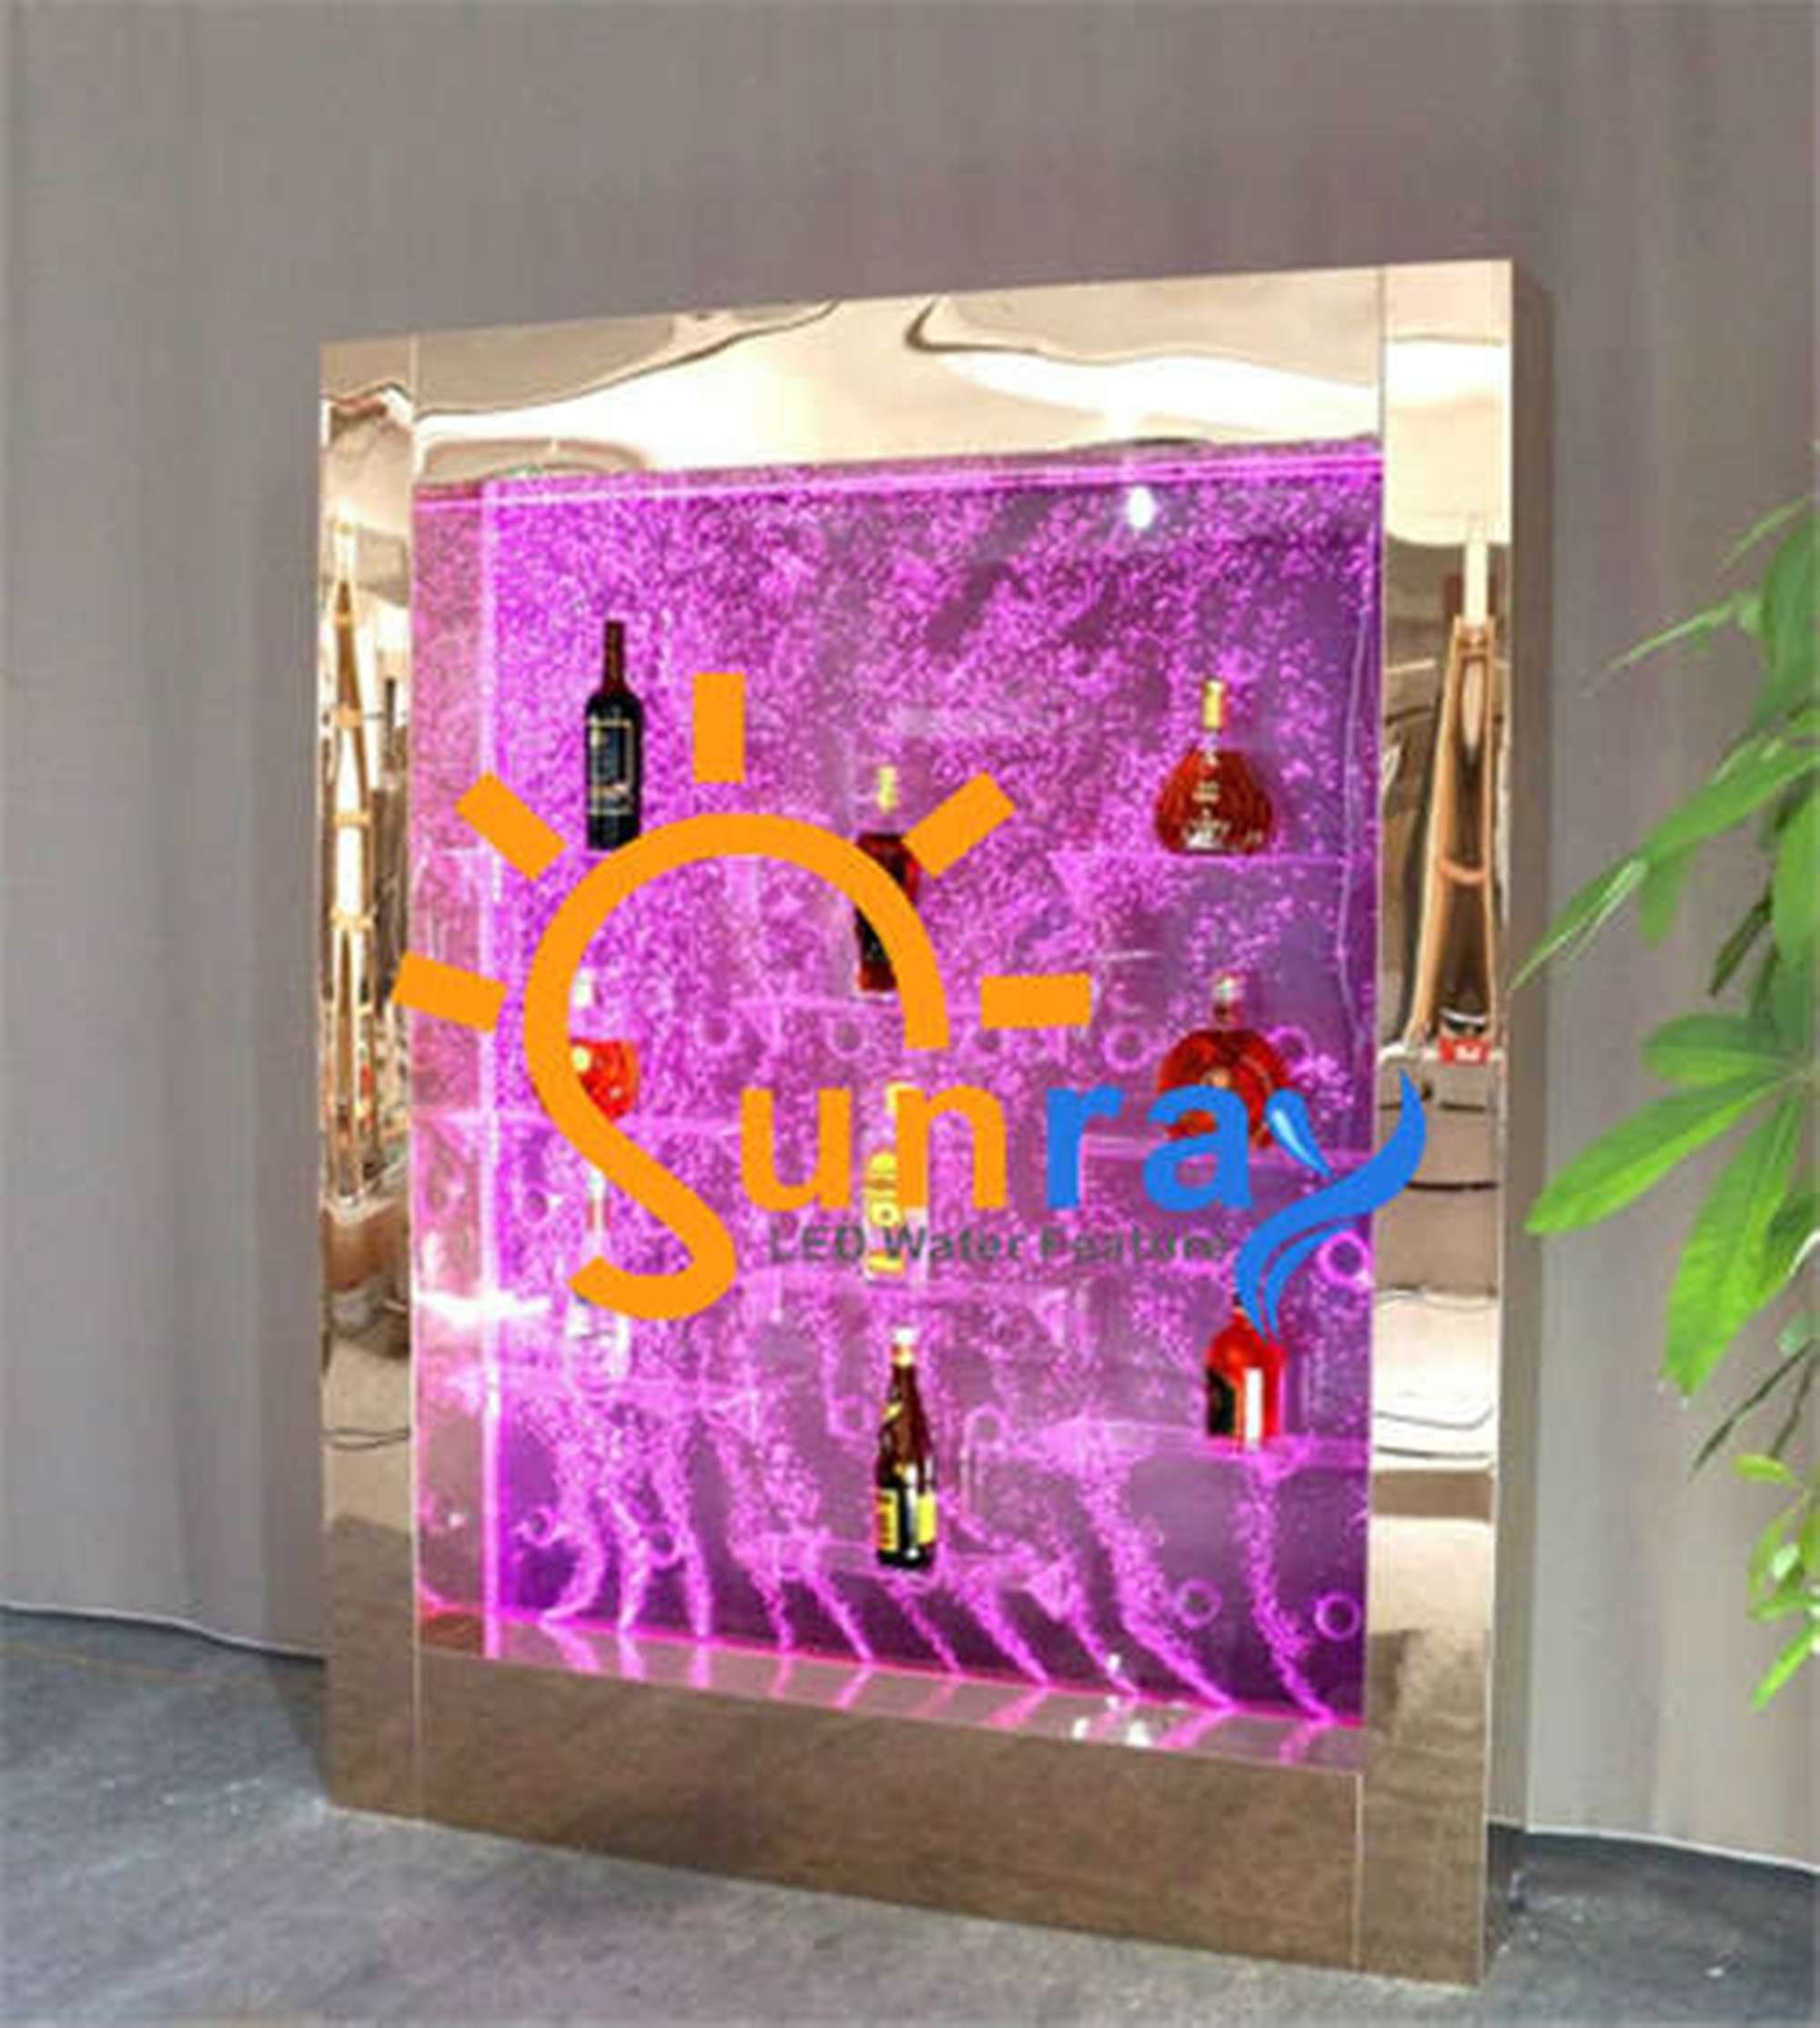 JVmoebel Wandregal, LED Glas Wand Schrank Wasser Regal Ausgefallene Regale Wände Bar